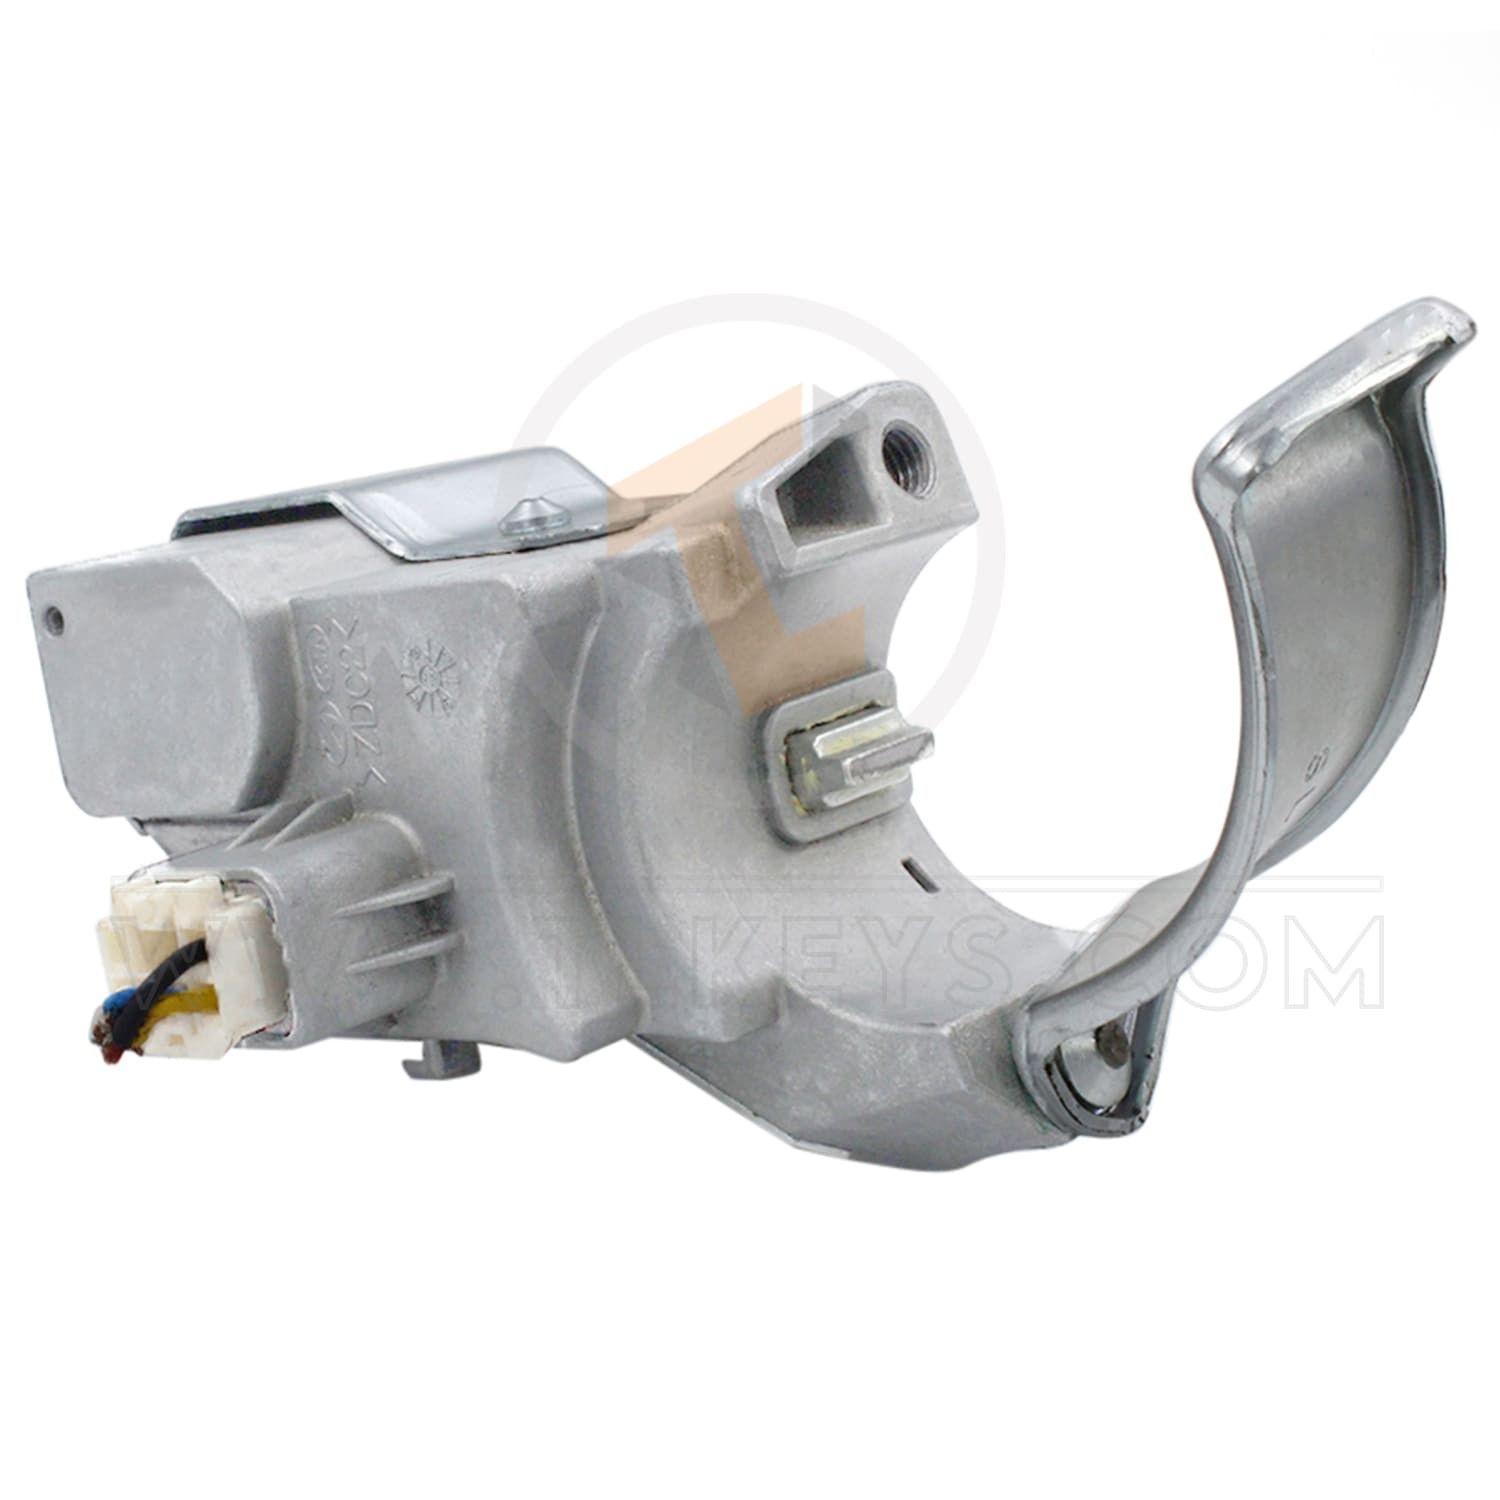 Steering Wheel Ignition Lock for Hyundai I30 2011- Spare Parts Type Steering Wheel Lock